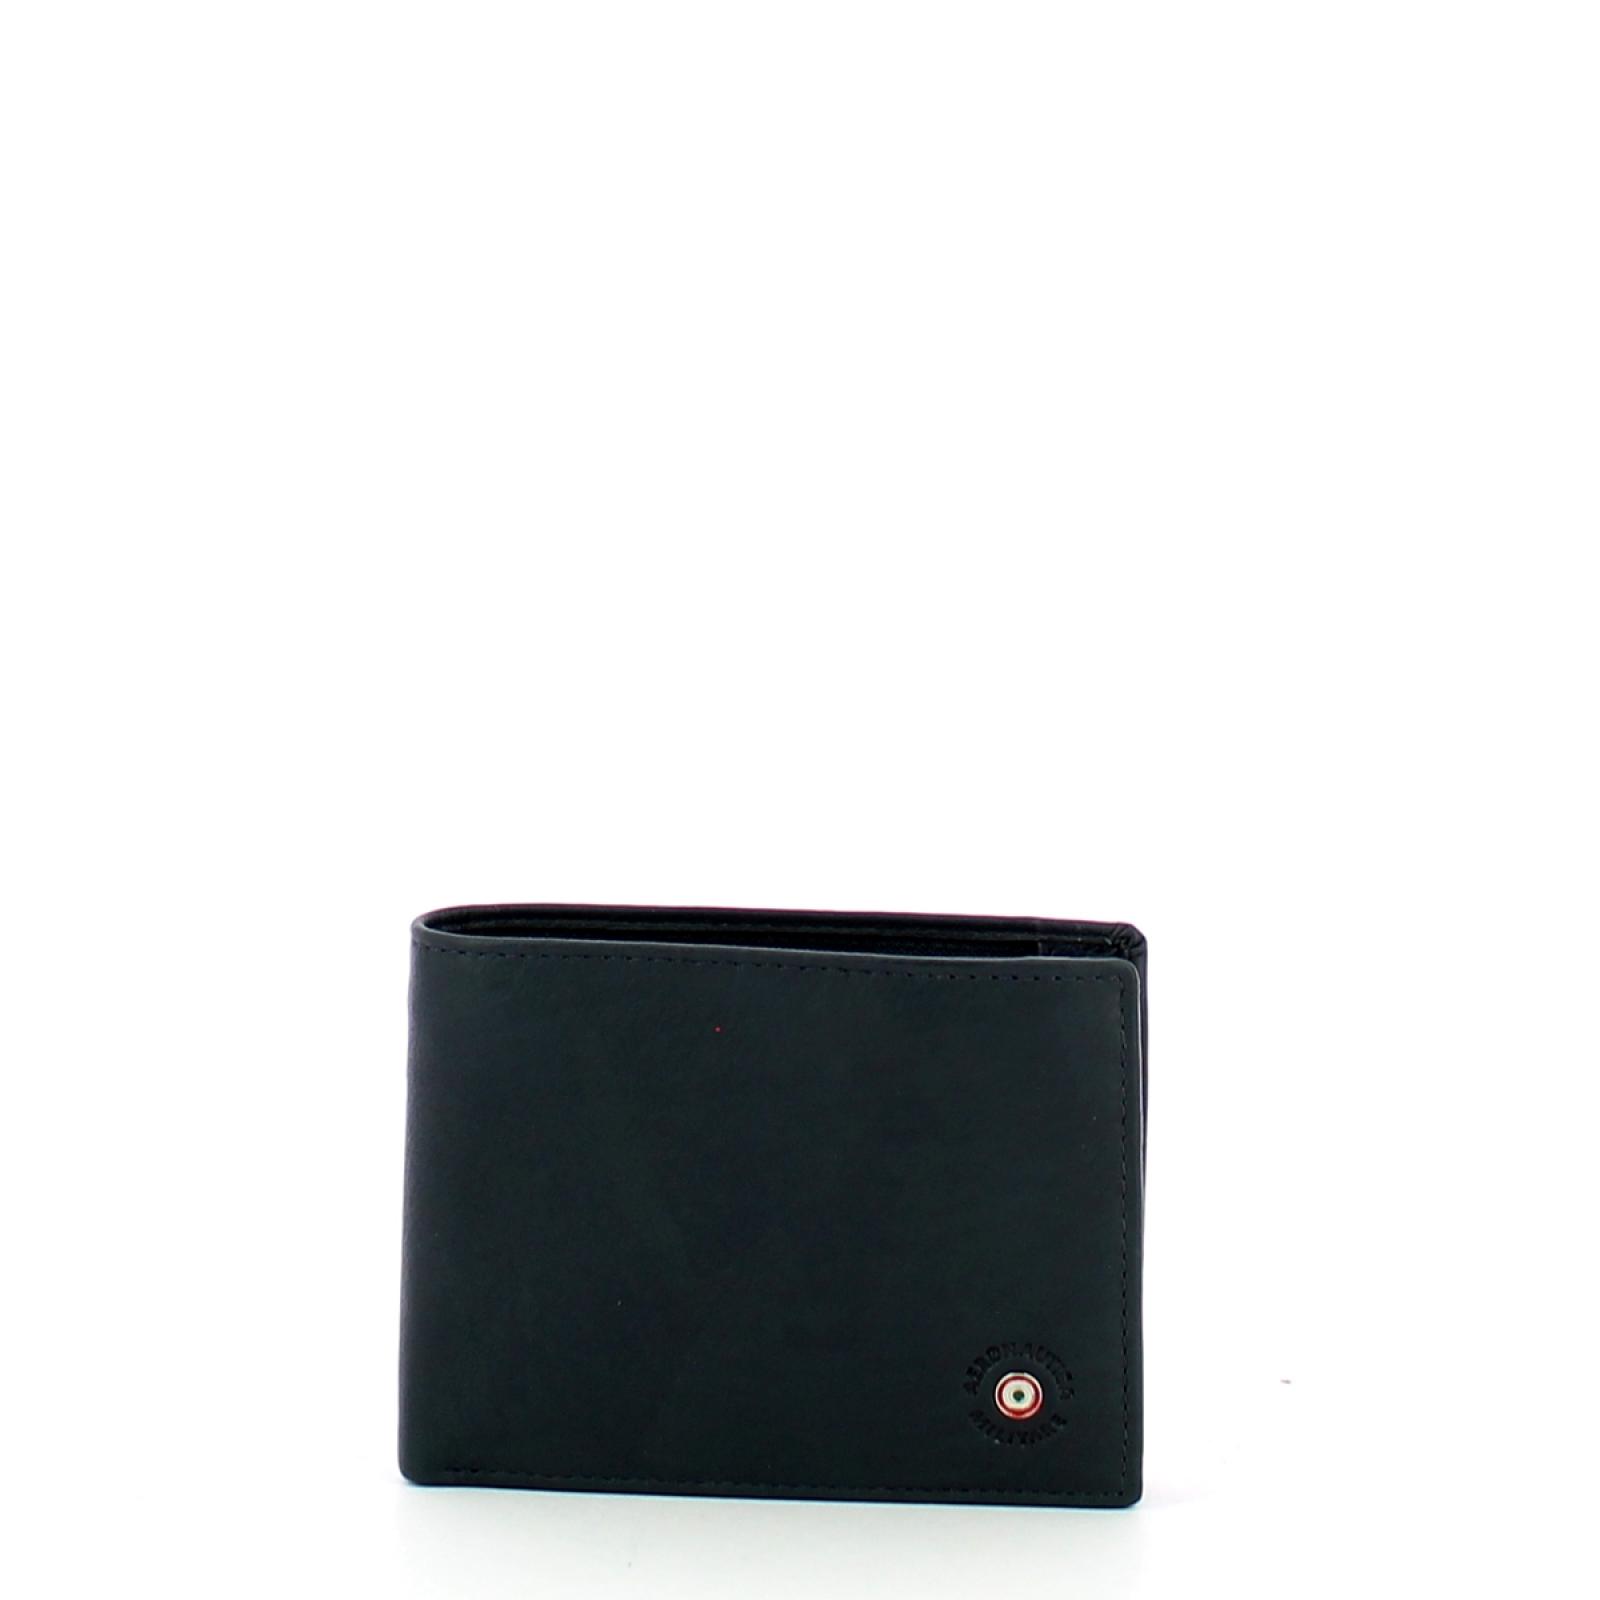 Aereonautica Militare Men wallet with RFID and hidden pocket - 1